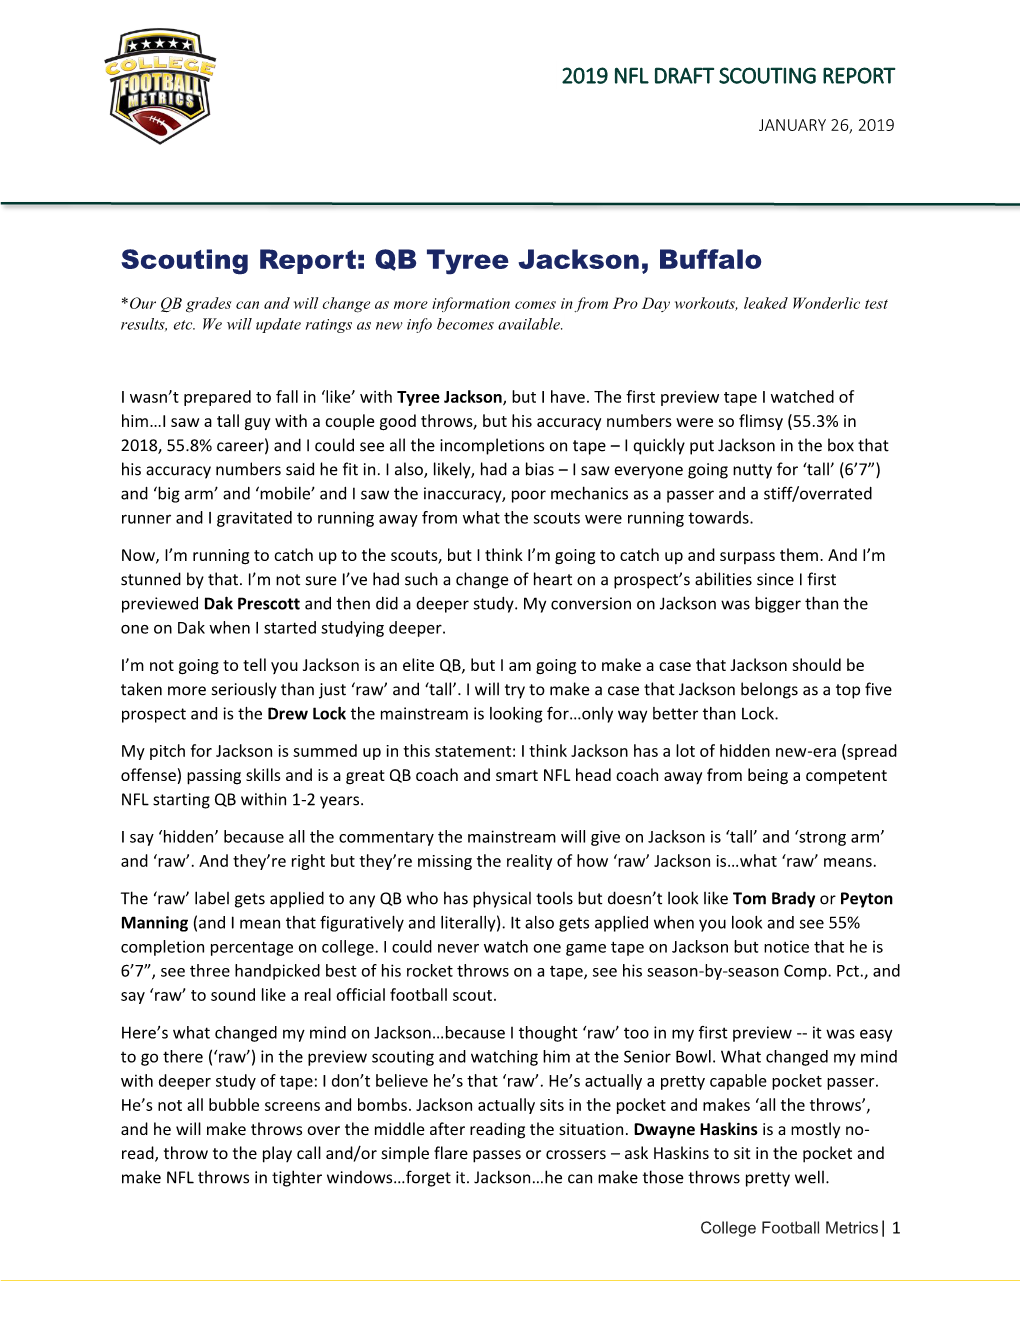 Scouting Report: QB Tyree Jackson, Buffalo